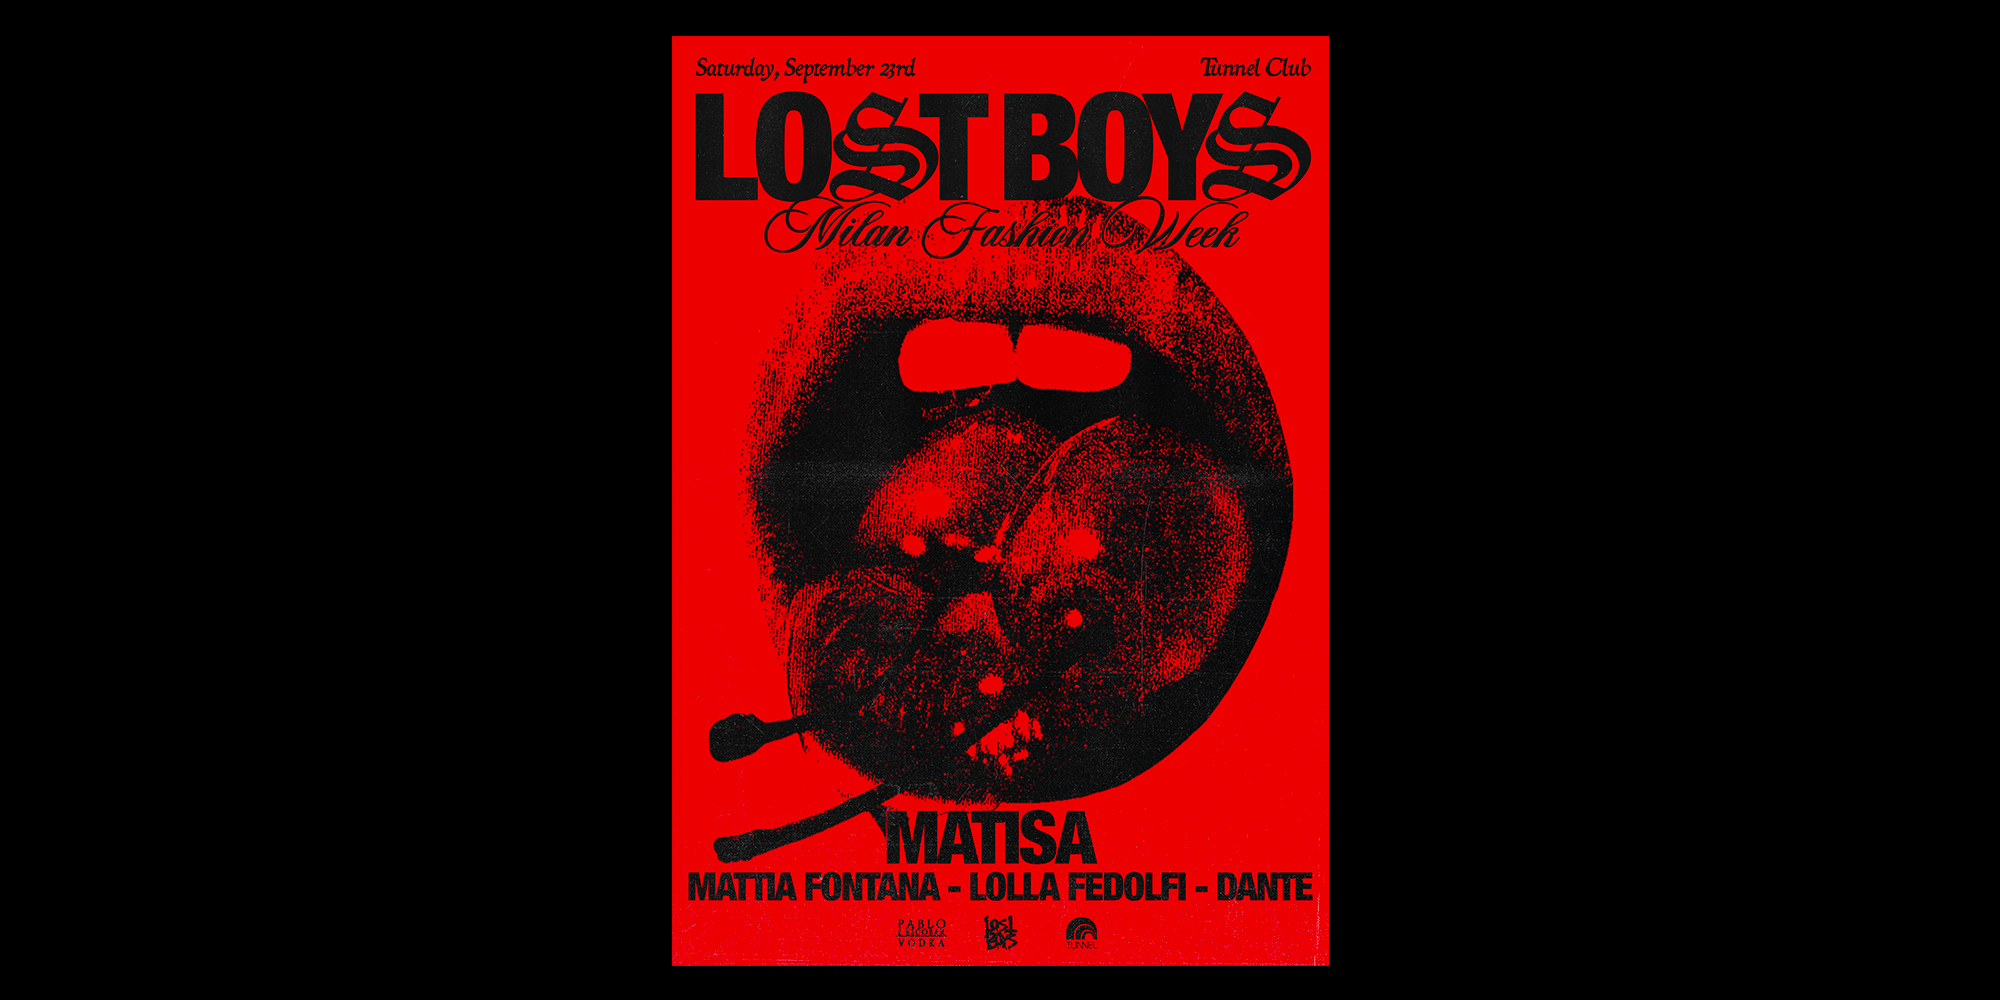 Lost Boys x MFW with Matisa - Página frontal